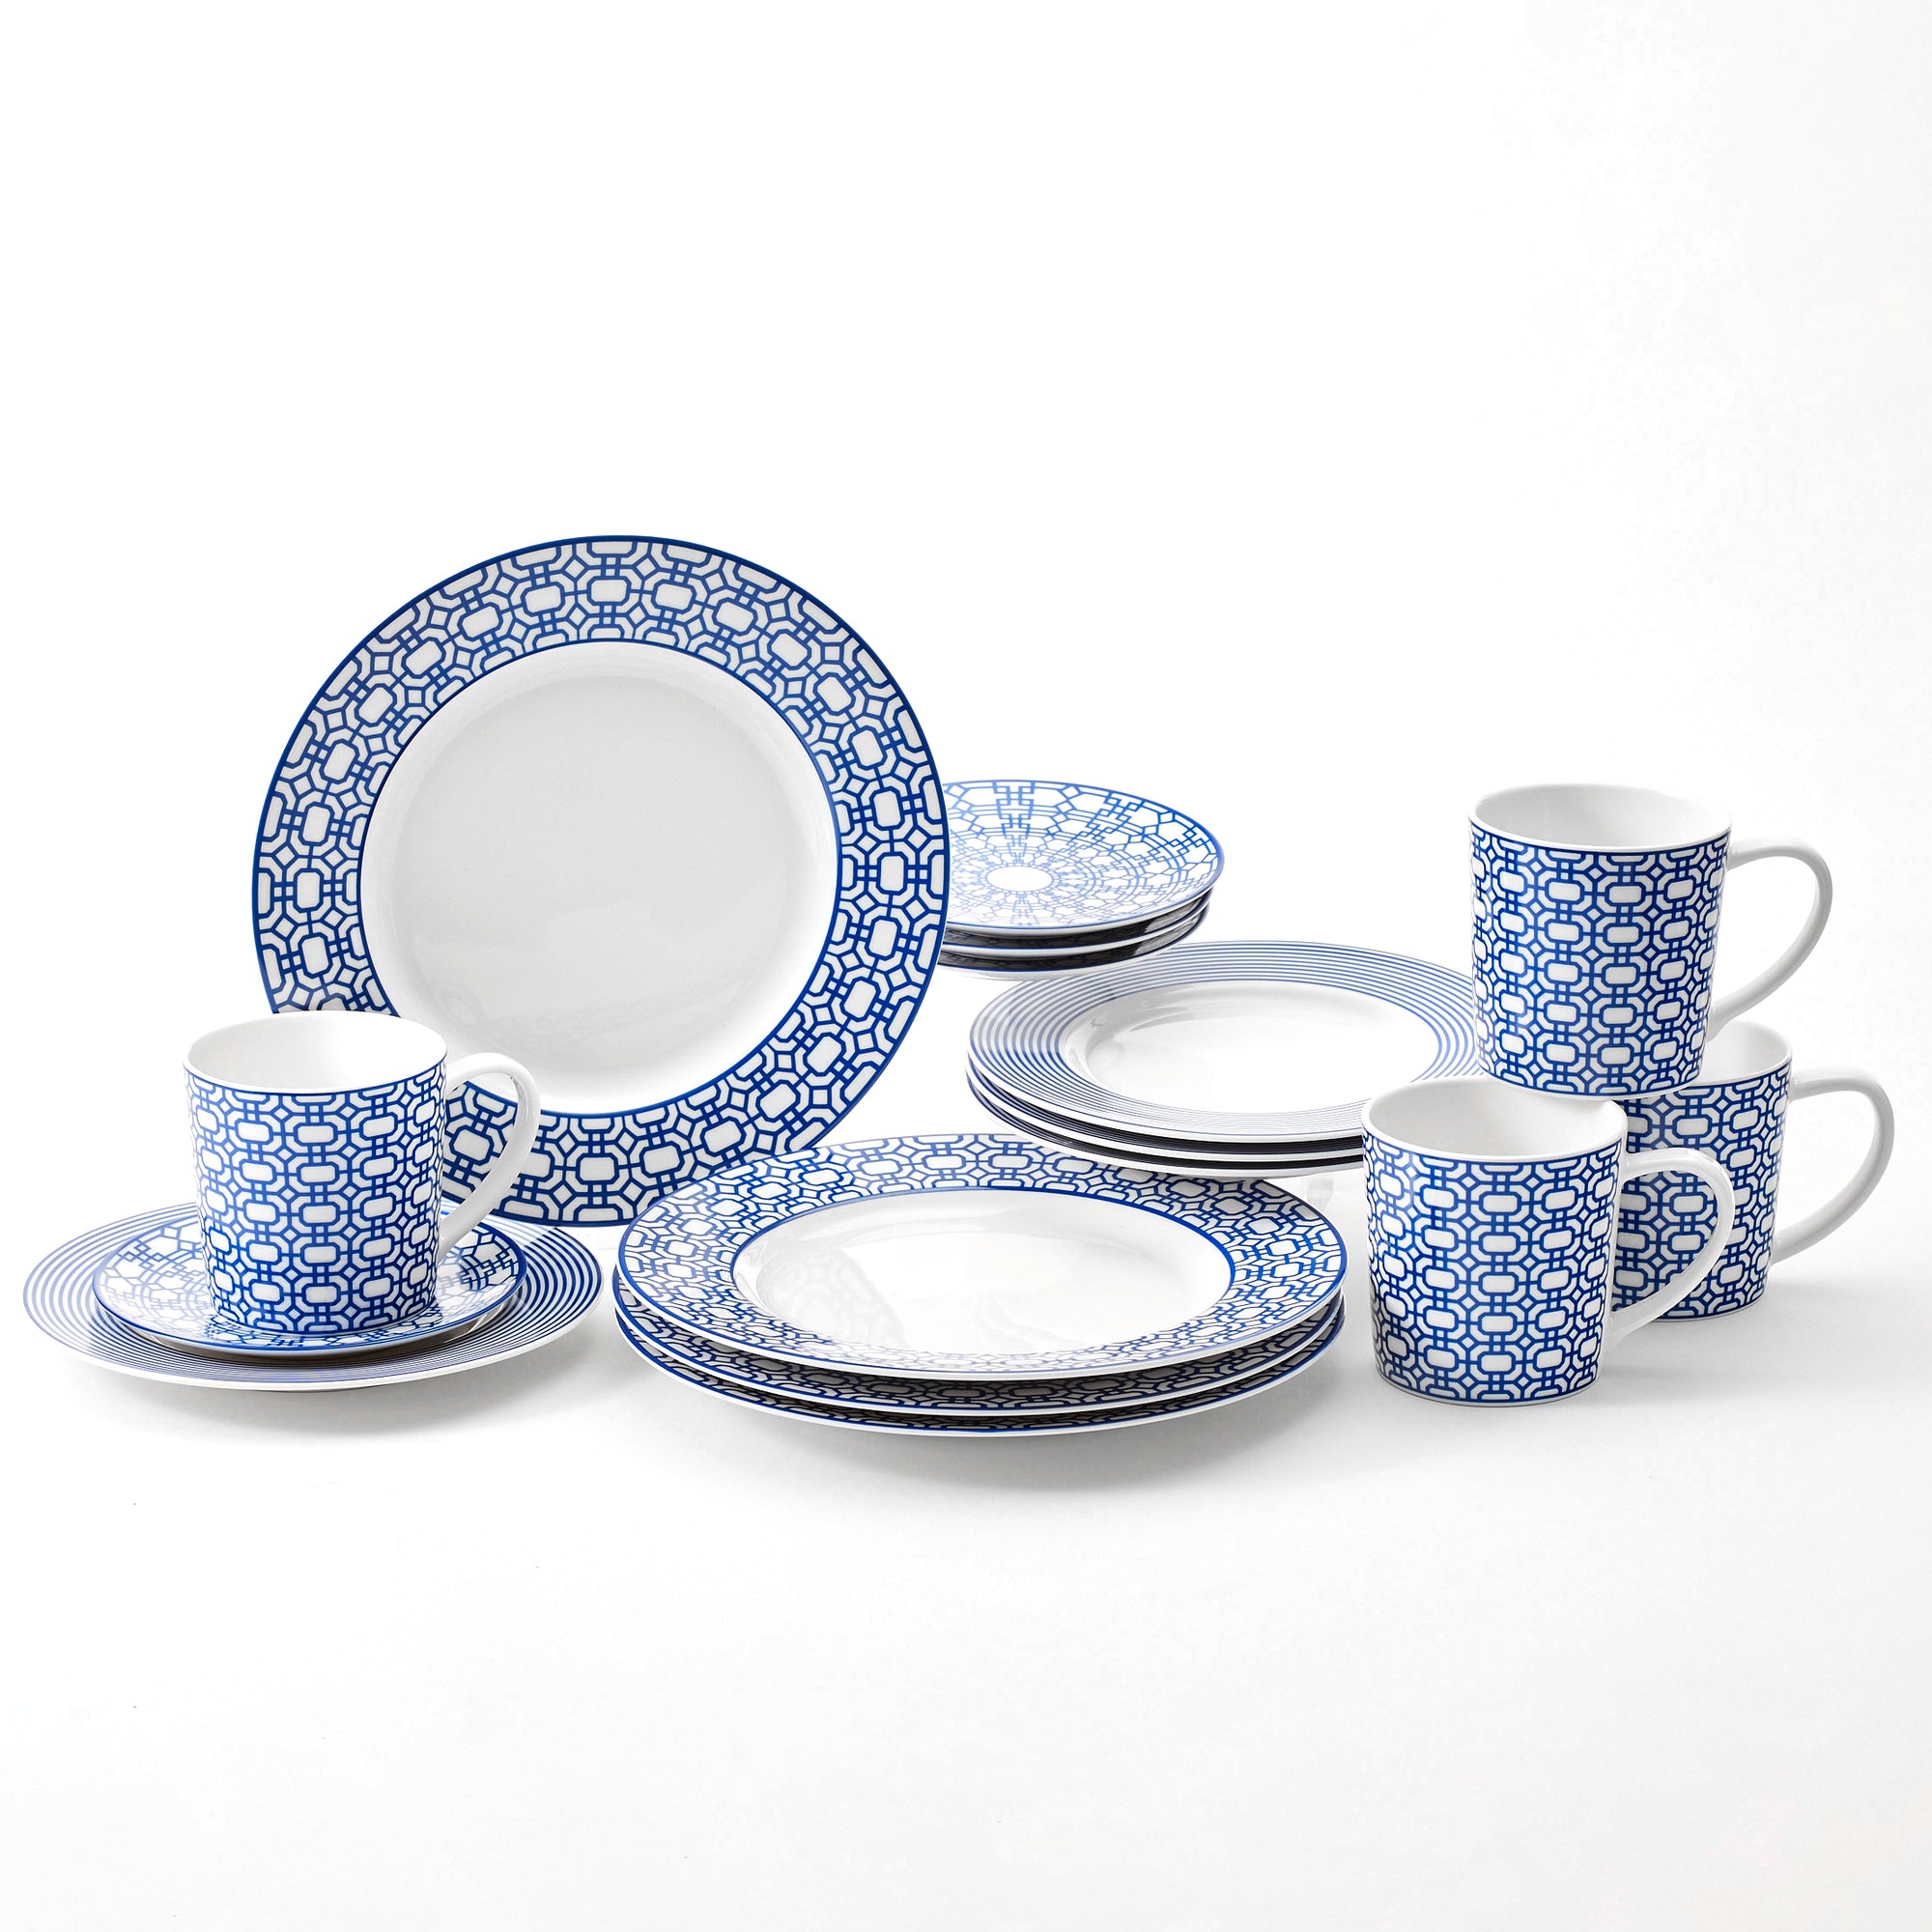 16 piece blue and white porcelain dinnerware set in Newport Garden Gate pattern from Caskata